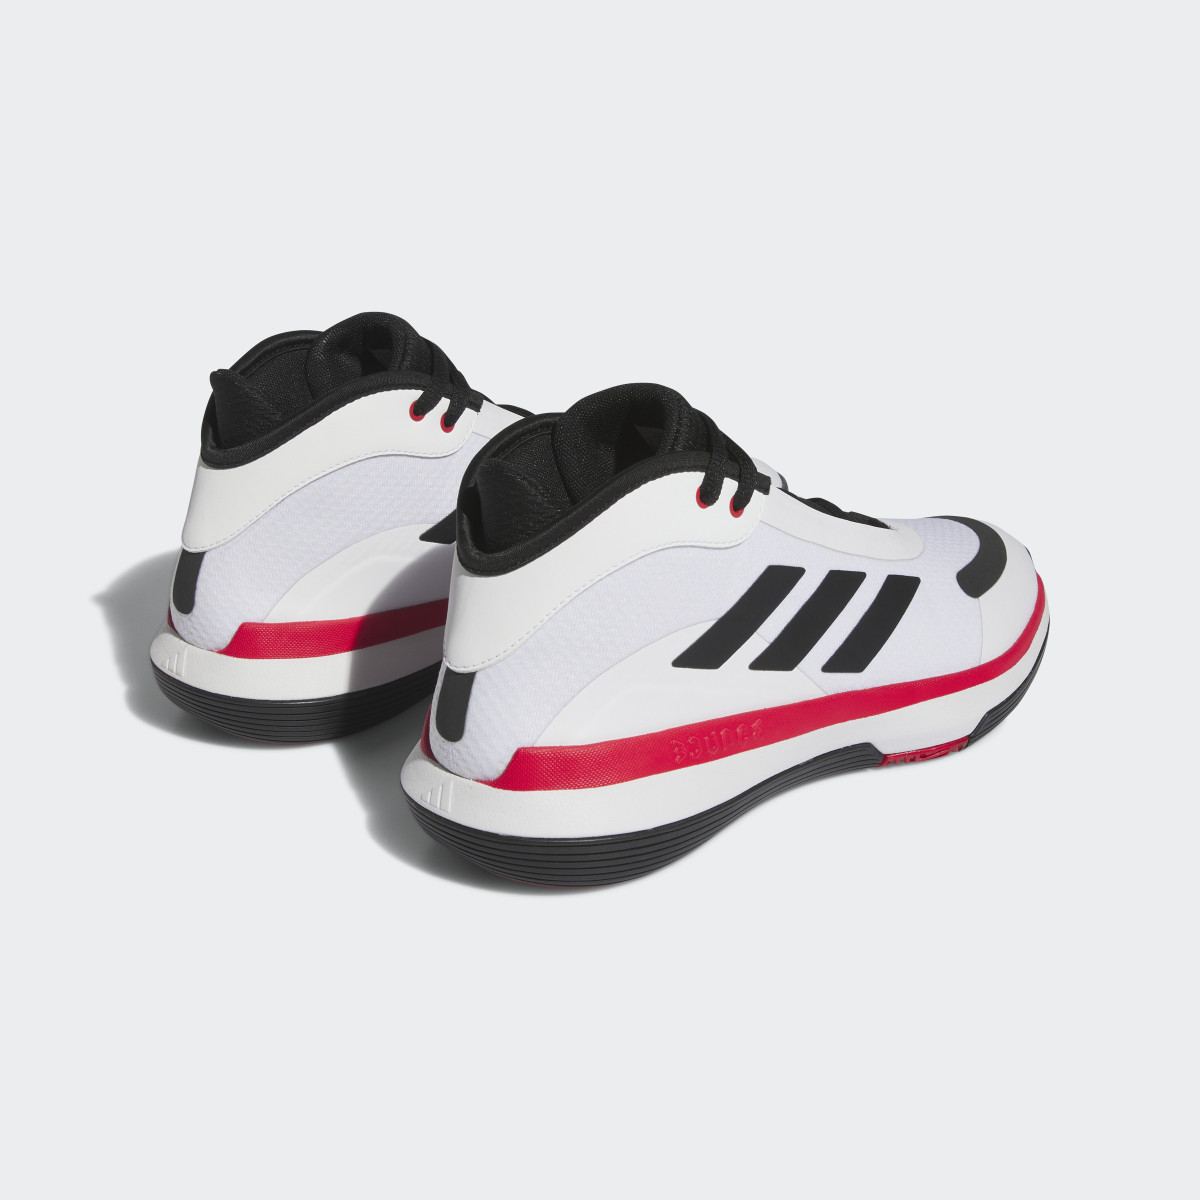 Adidas Bounce Legends Shoes. 8